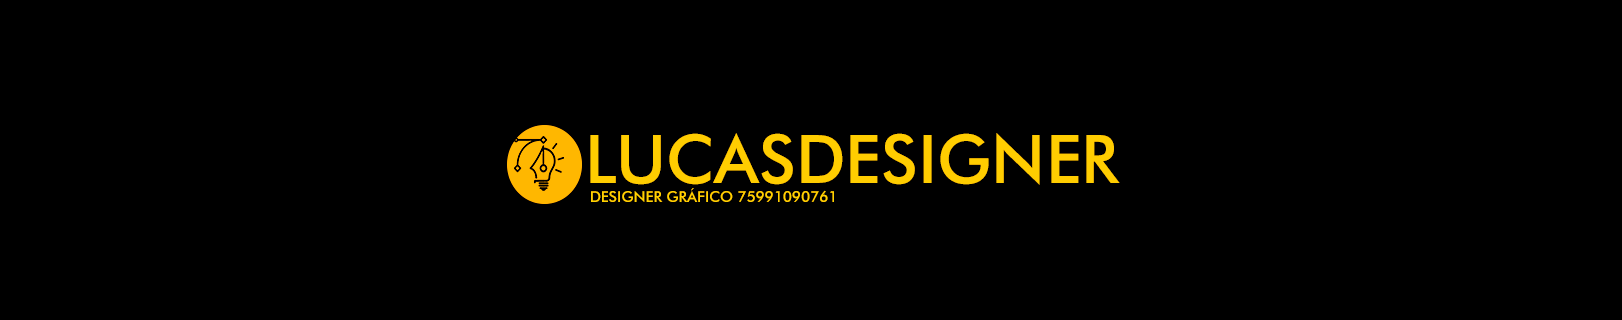 LUCAS DESIGNER's profile banner